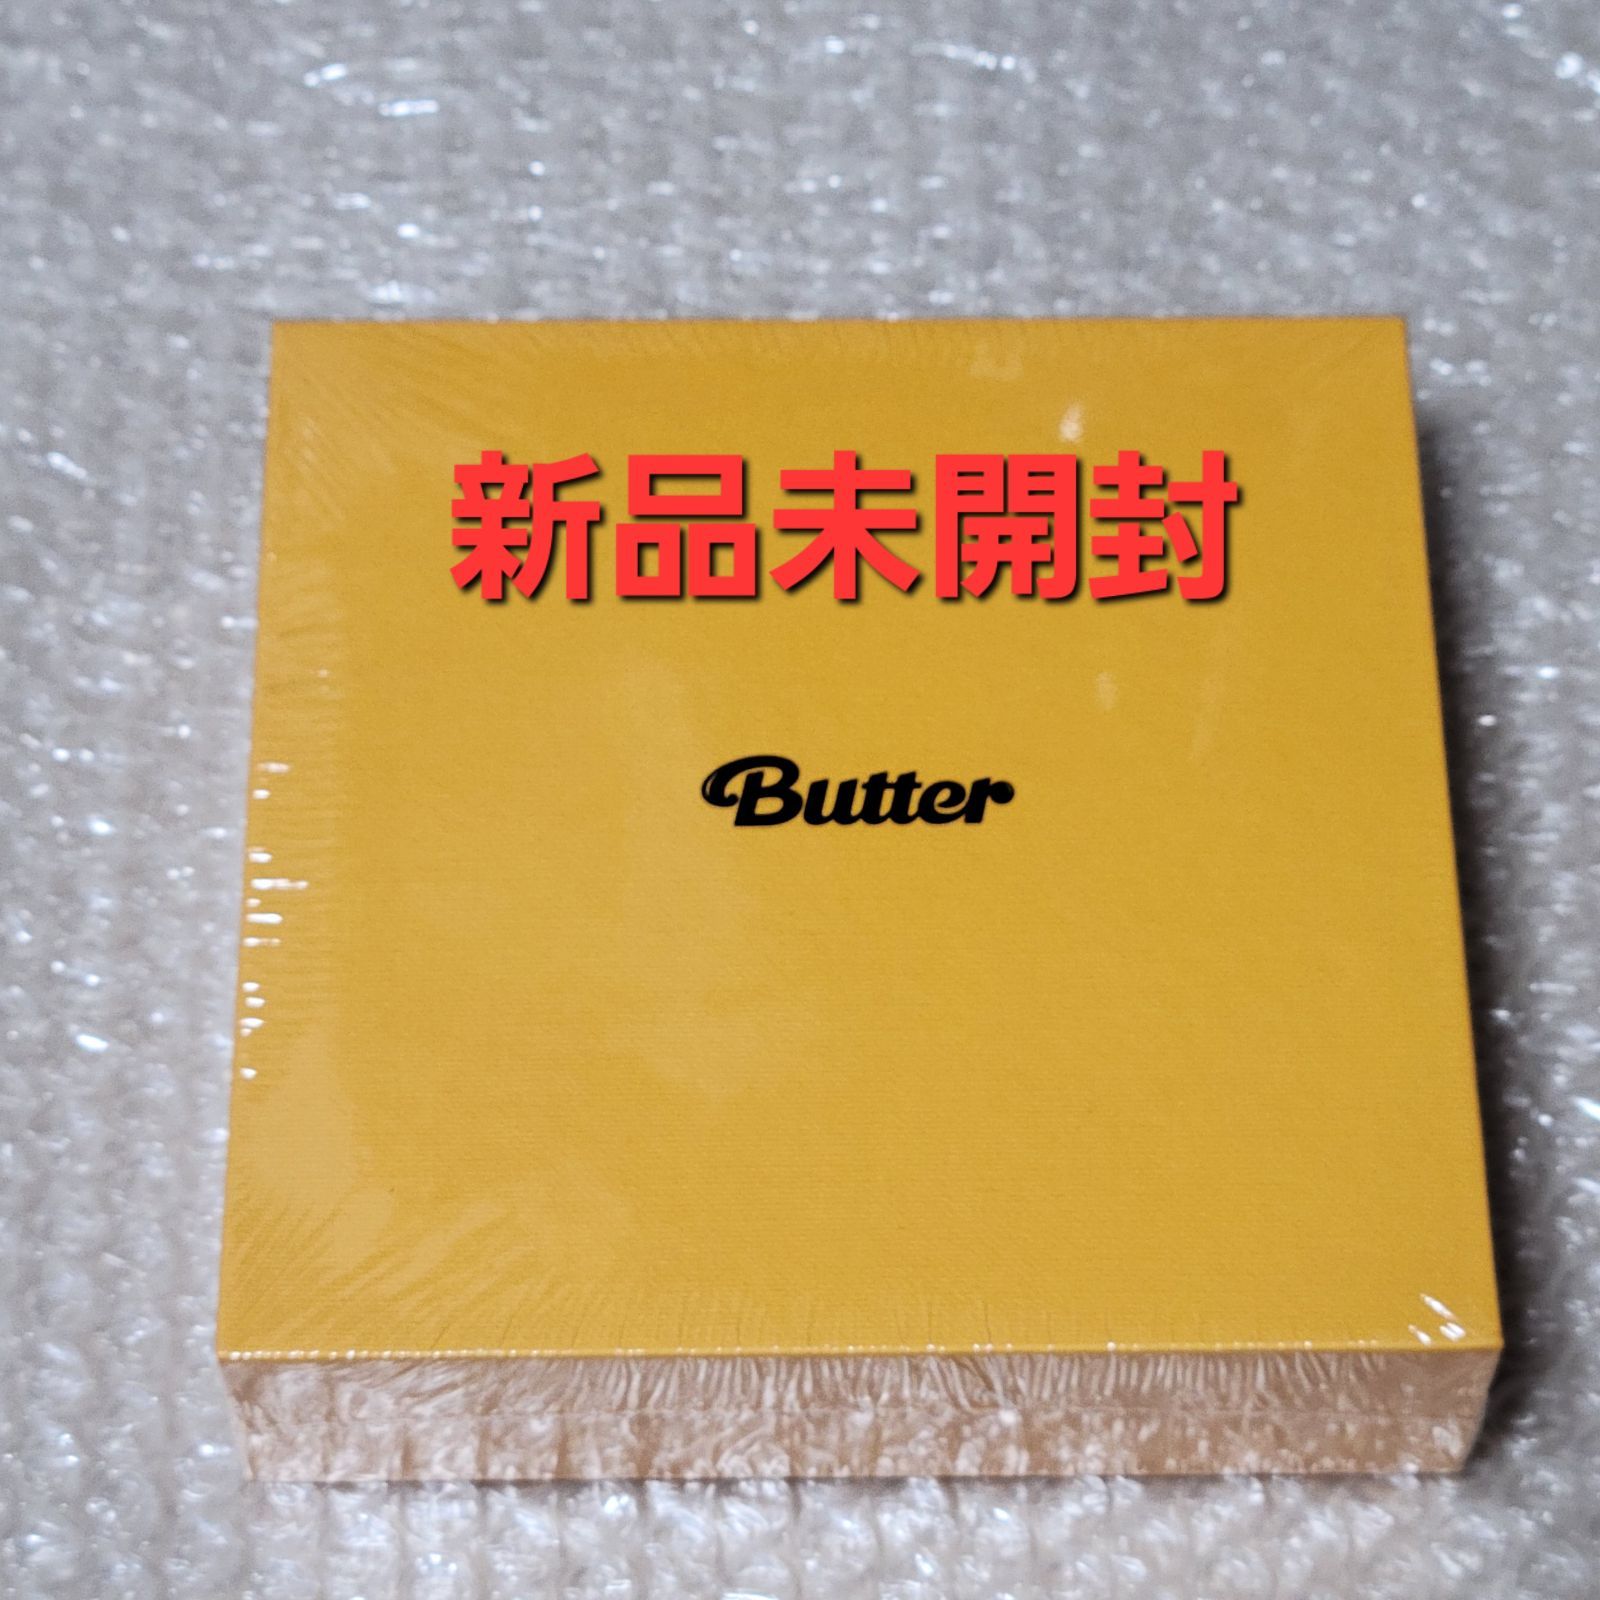 BTS 公式 Butter バター CD - K-POP